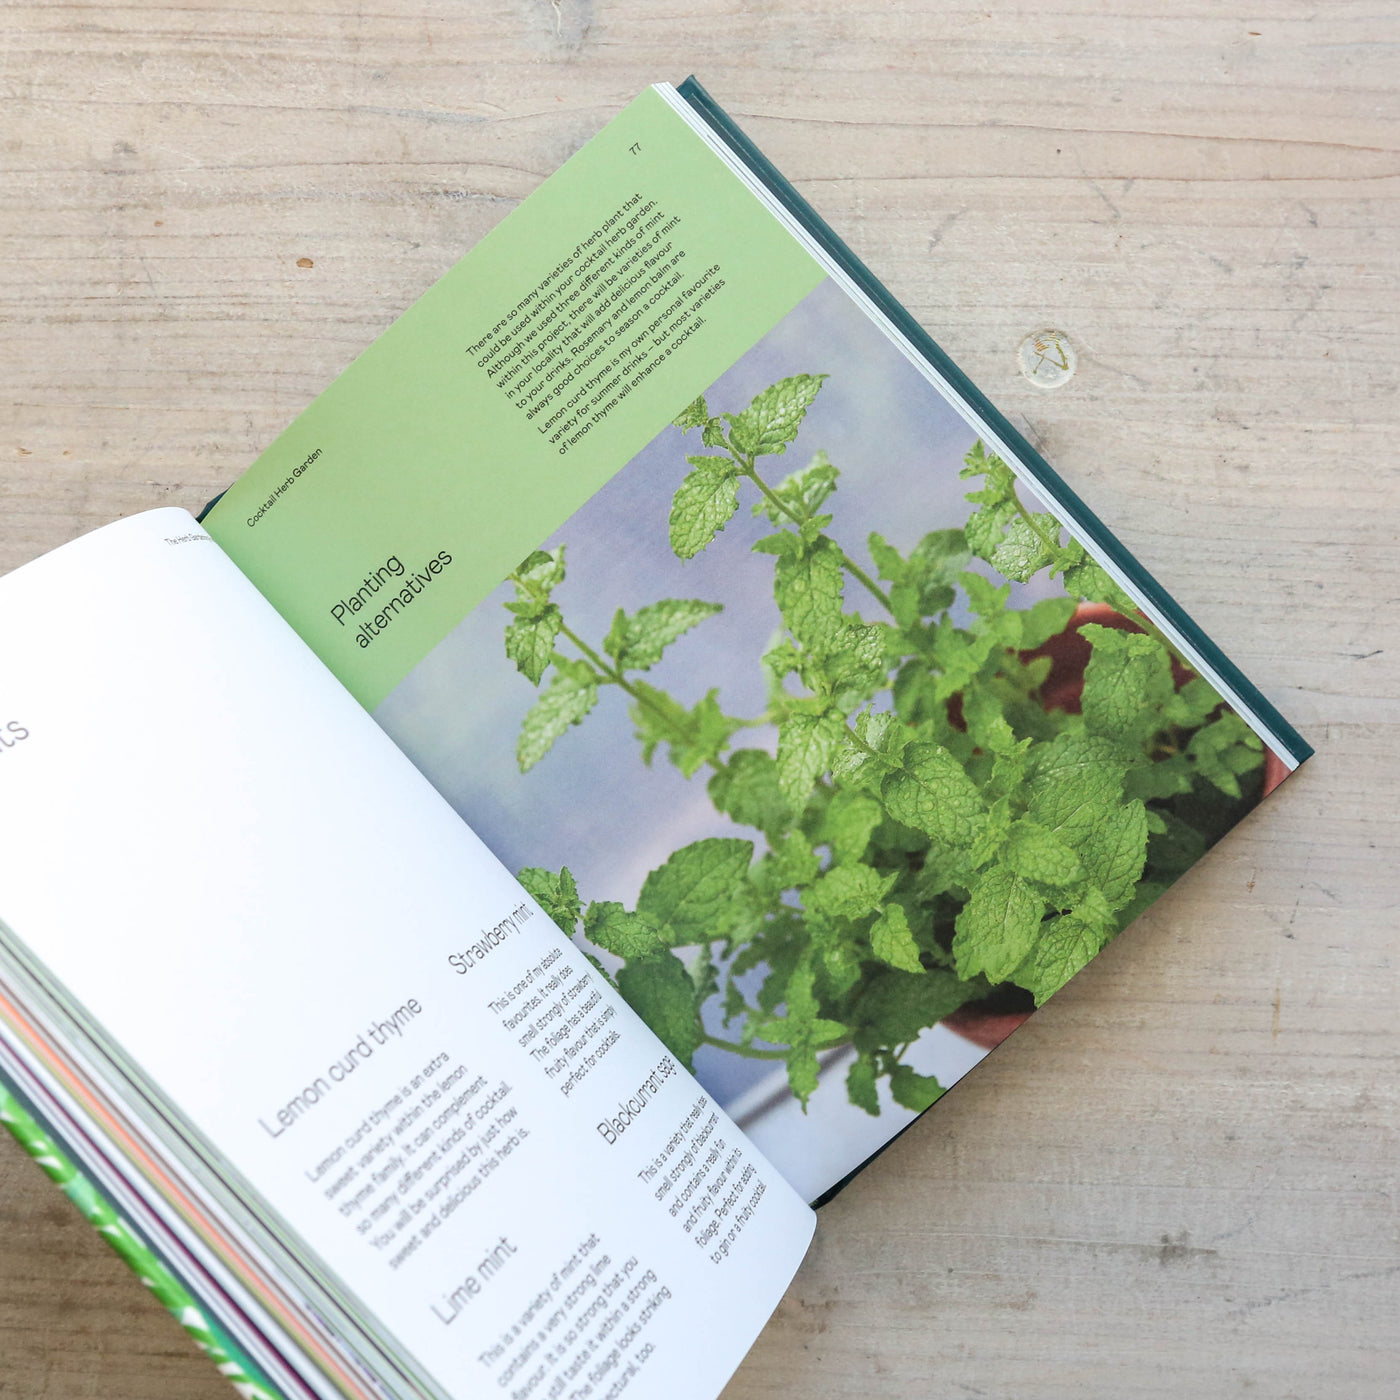 The Herb Gardening Handbook : A Beginner's Guide to Growing Herbs